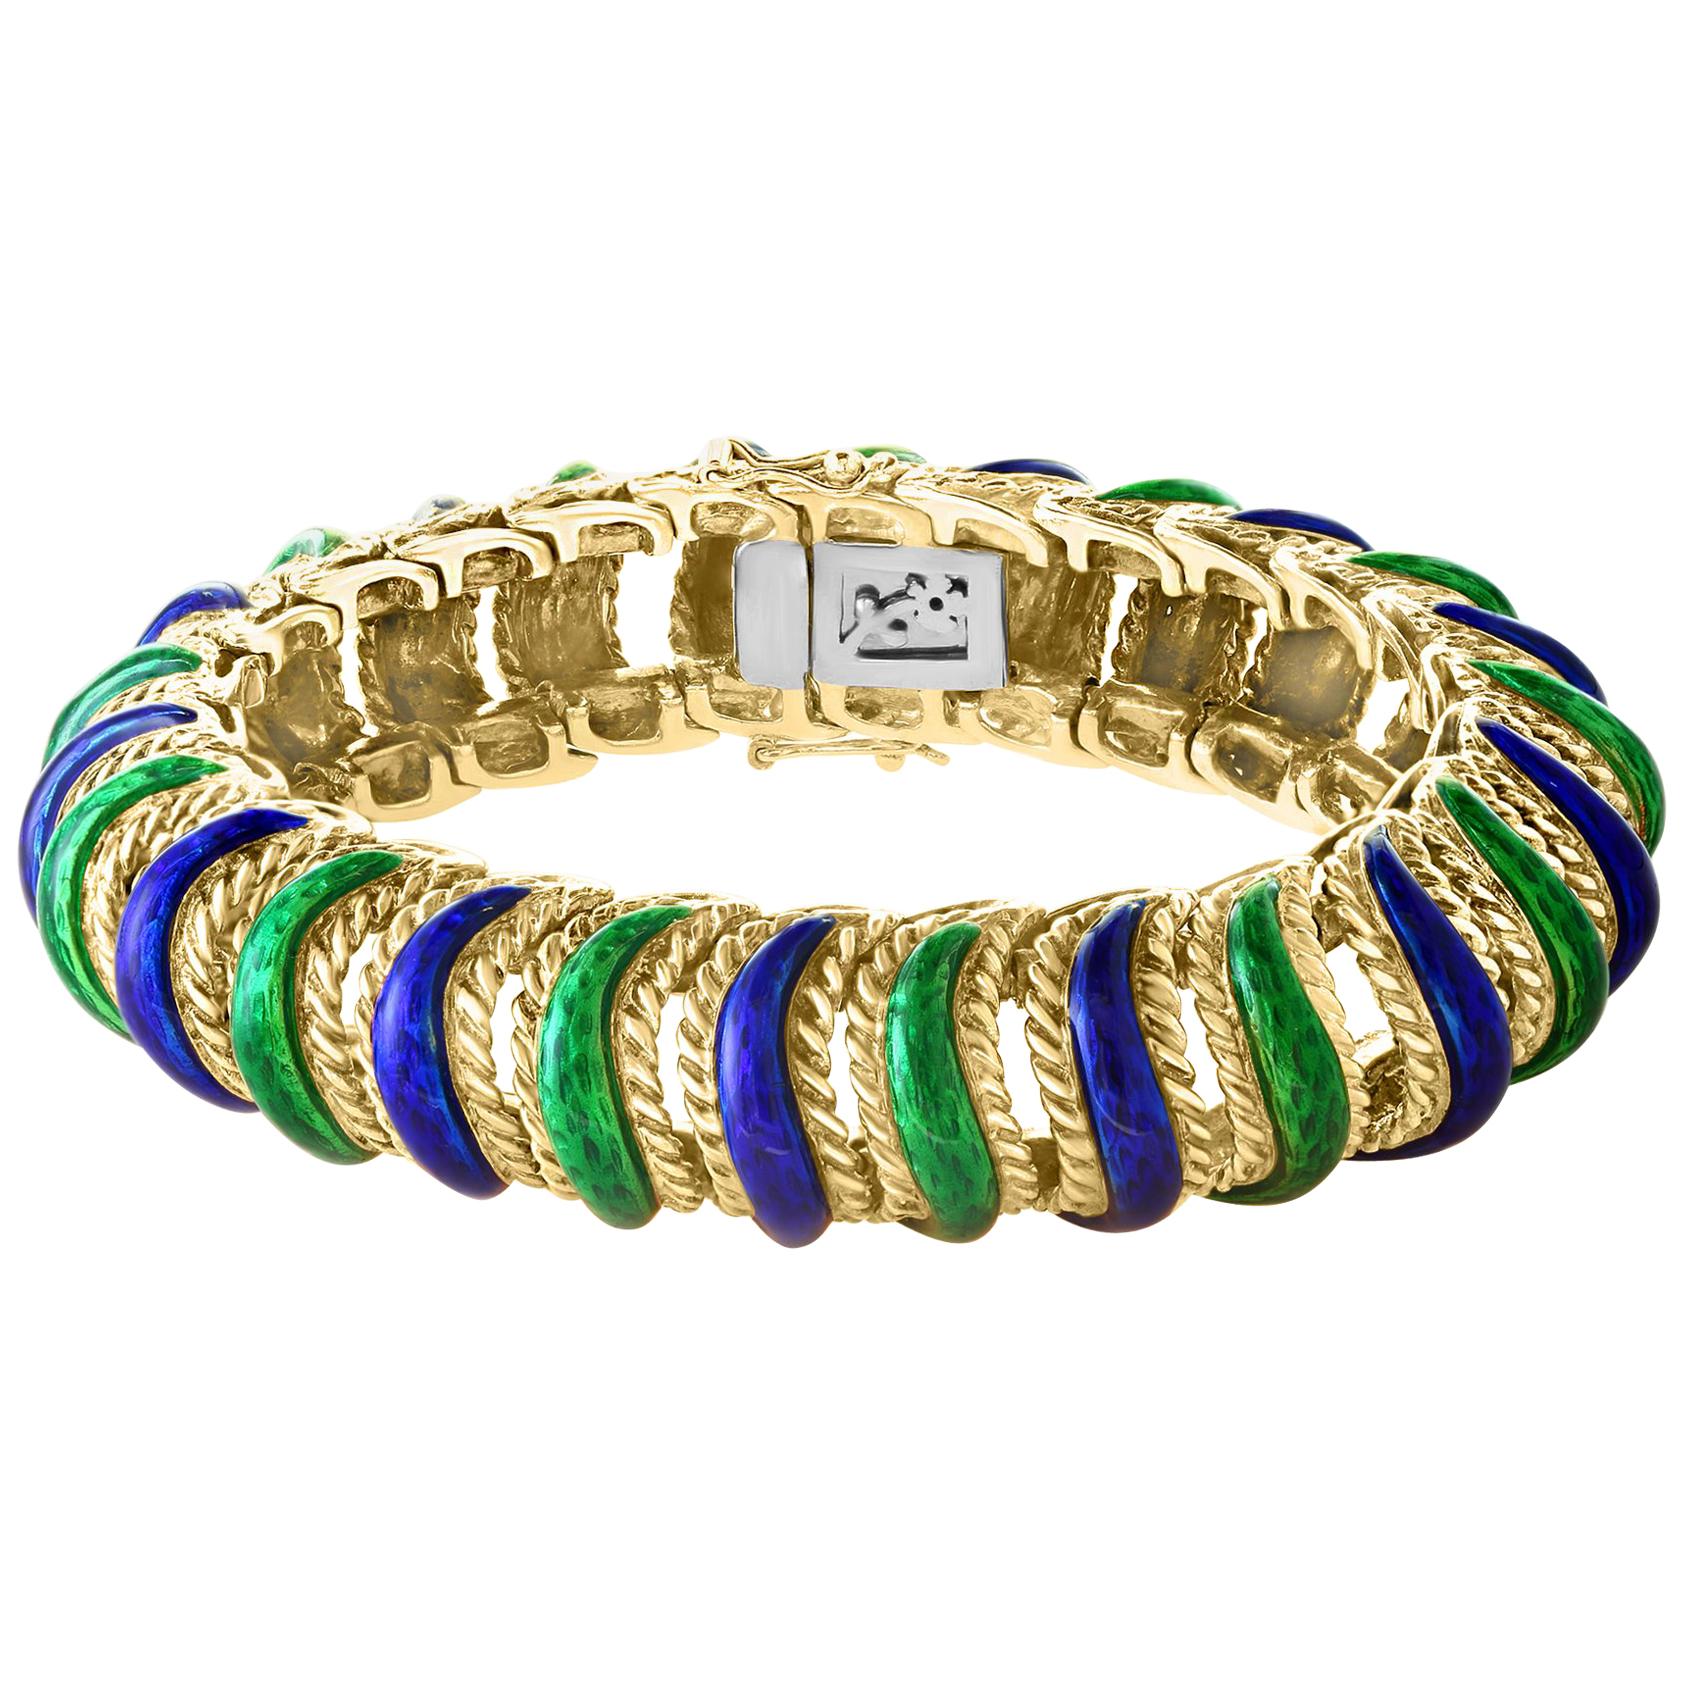 18 Karat Yellow Gold 95 Grams and Green and Blue Enamel Bangle or Bracelet